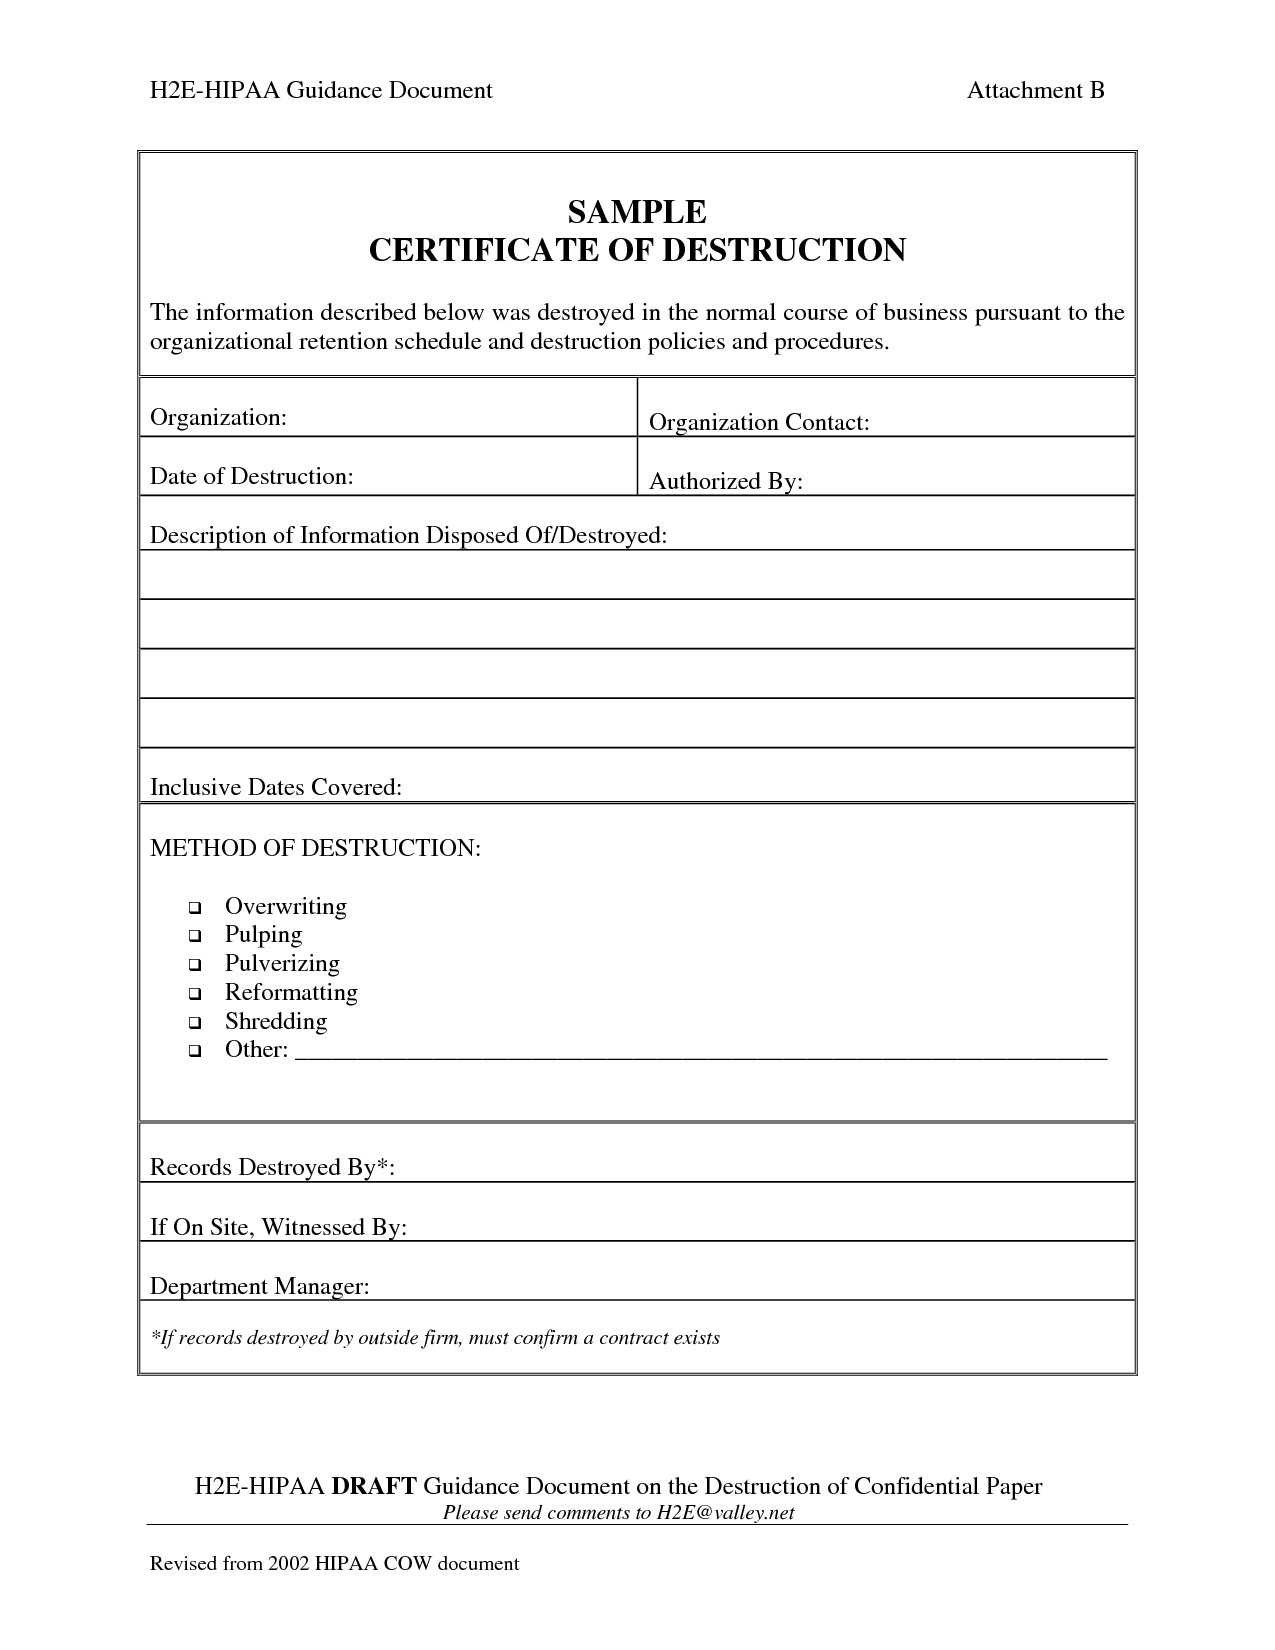 Certificate Of Destruction Template | Anti Grav Inside Destruction Certificate Template